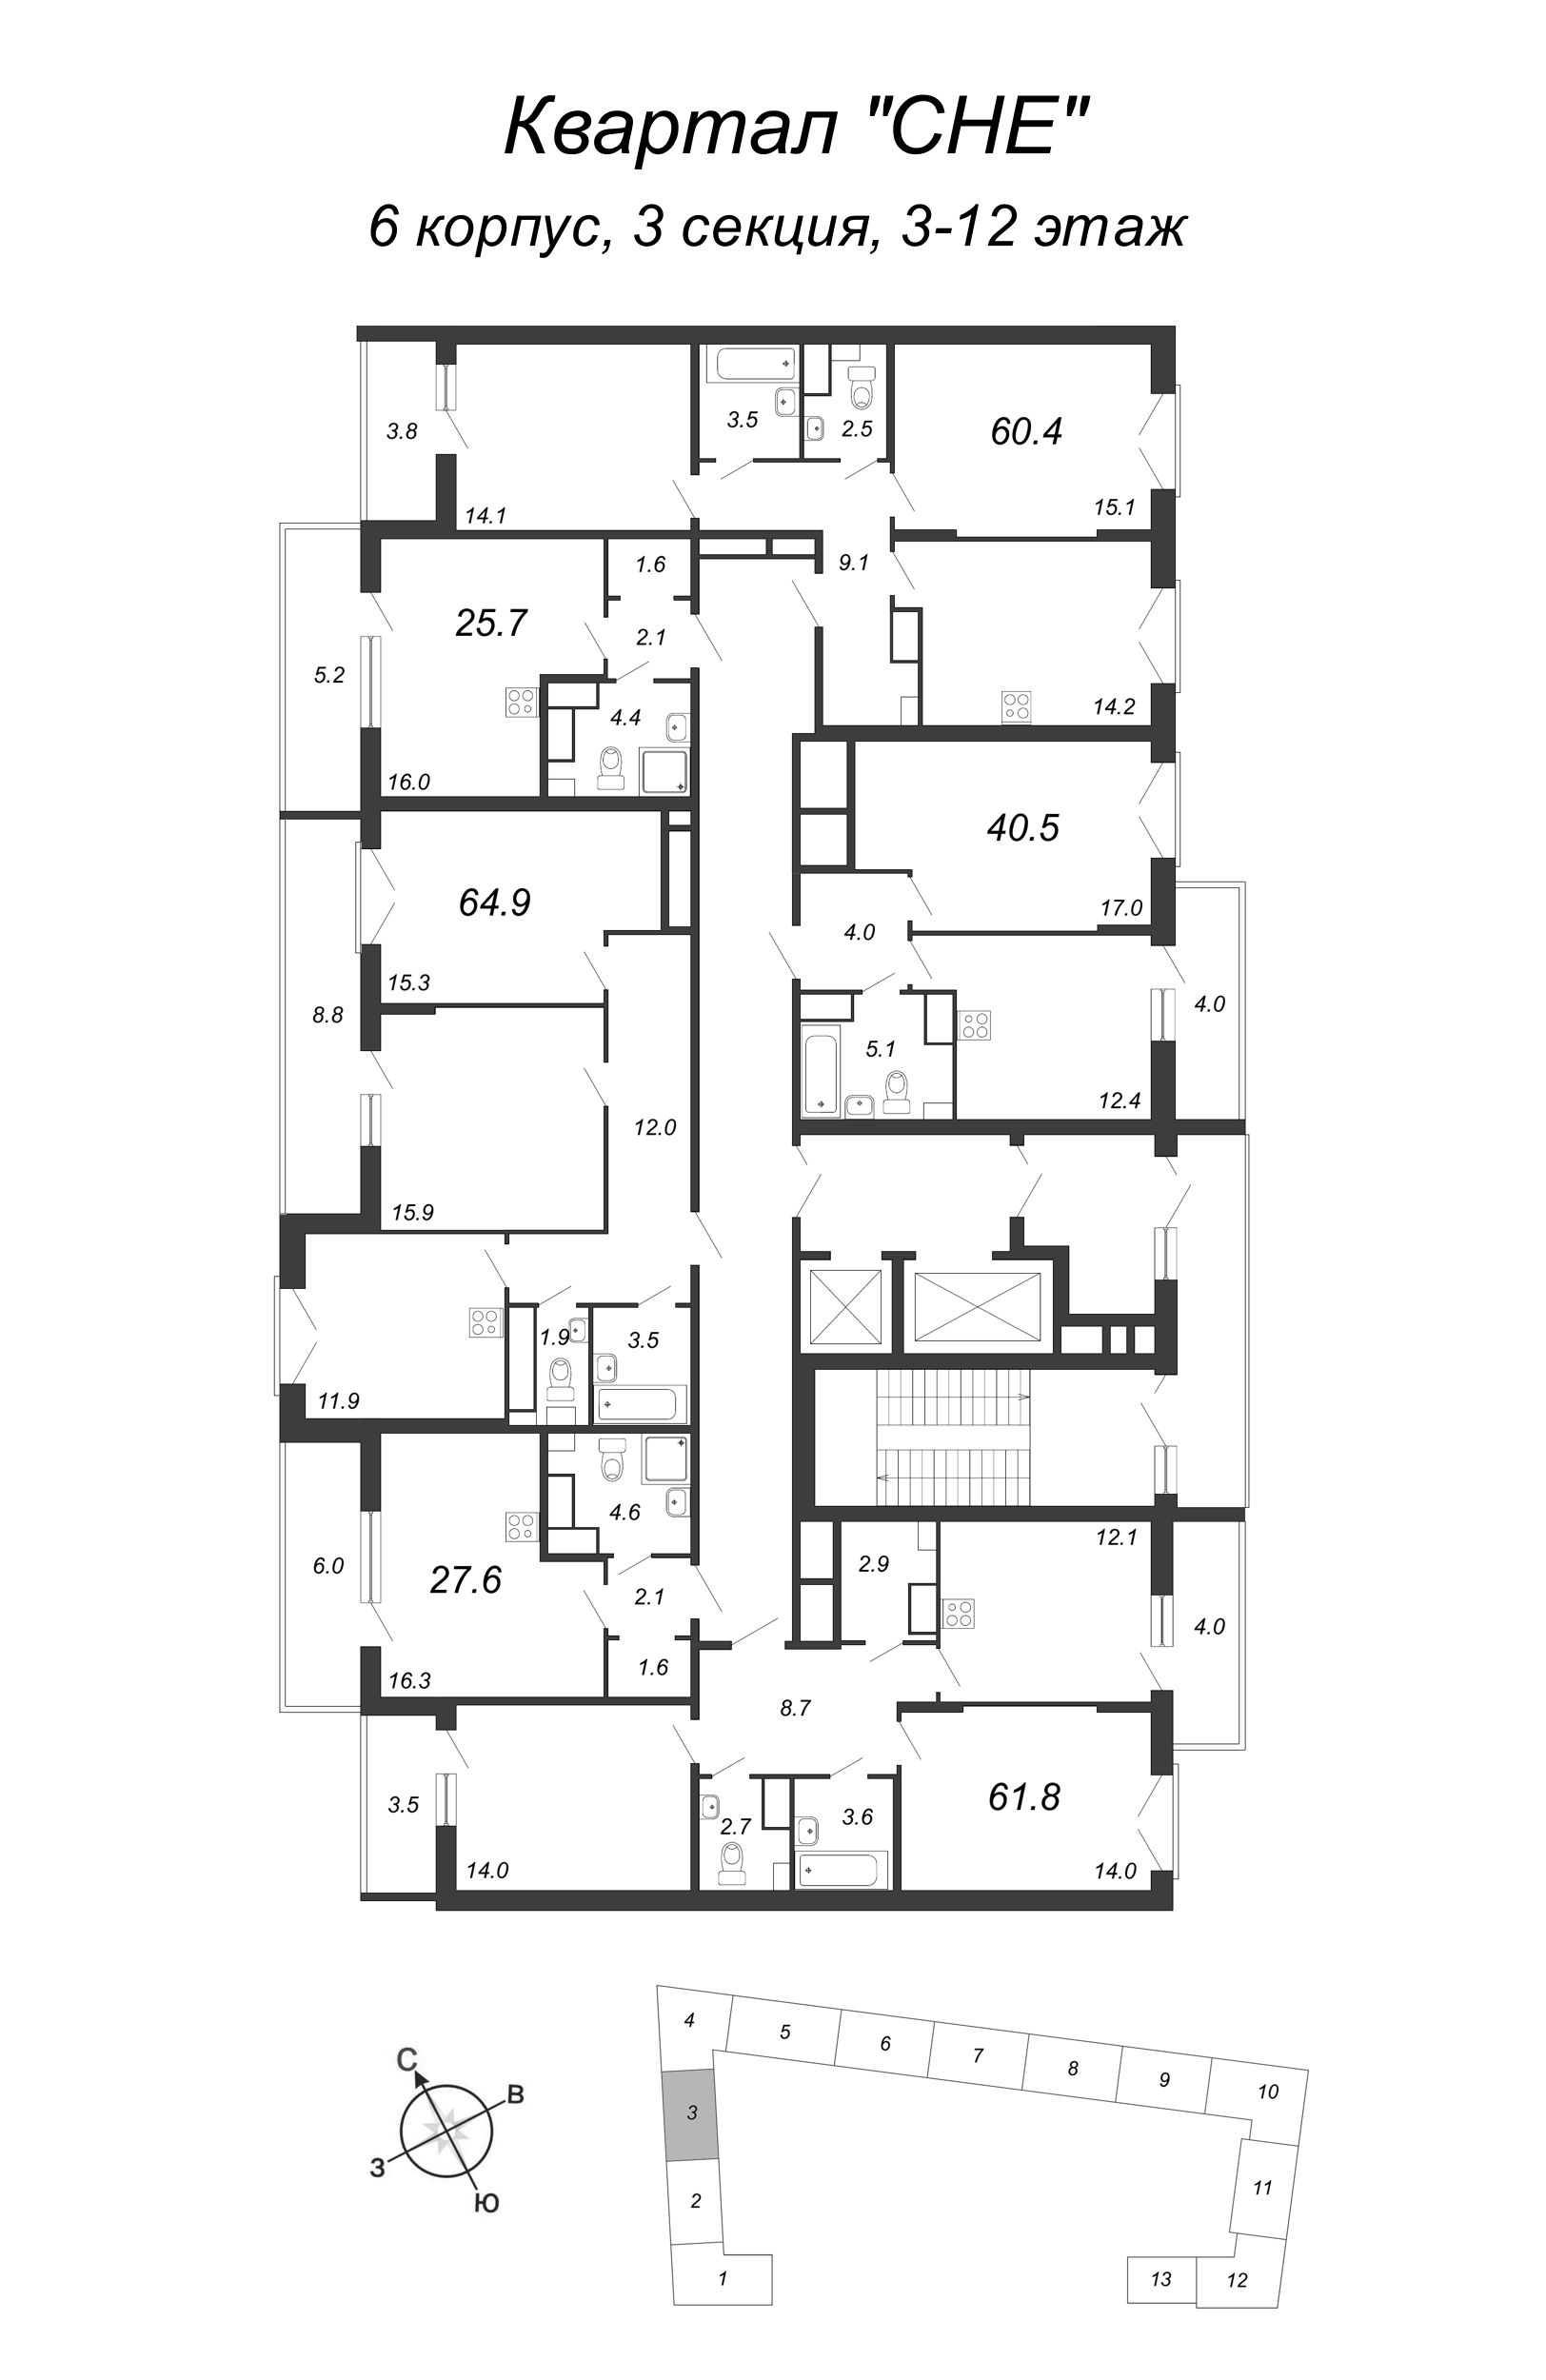 1-комнатная квартира, 41 м² в ЖК "Квартал Che" - планировка этажа